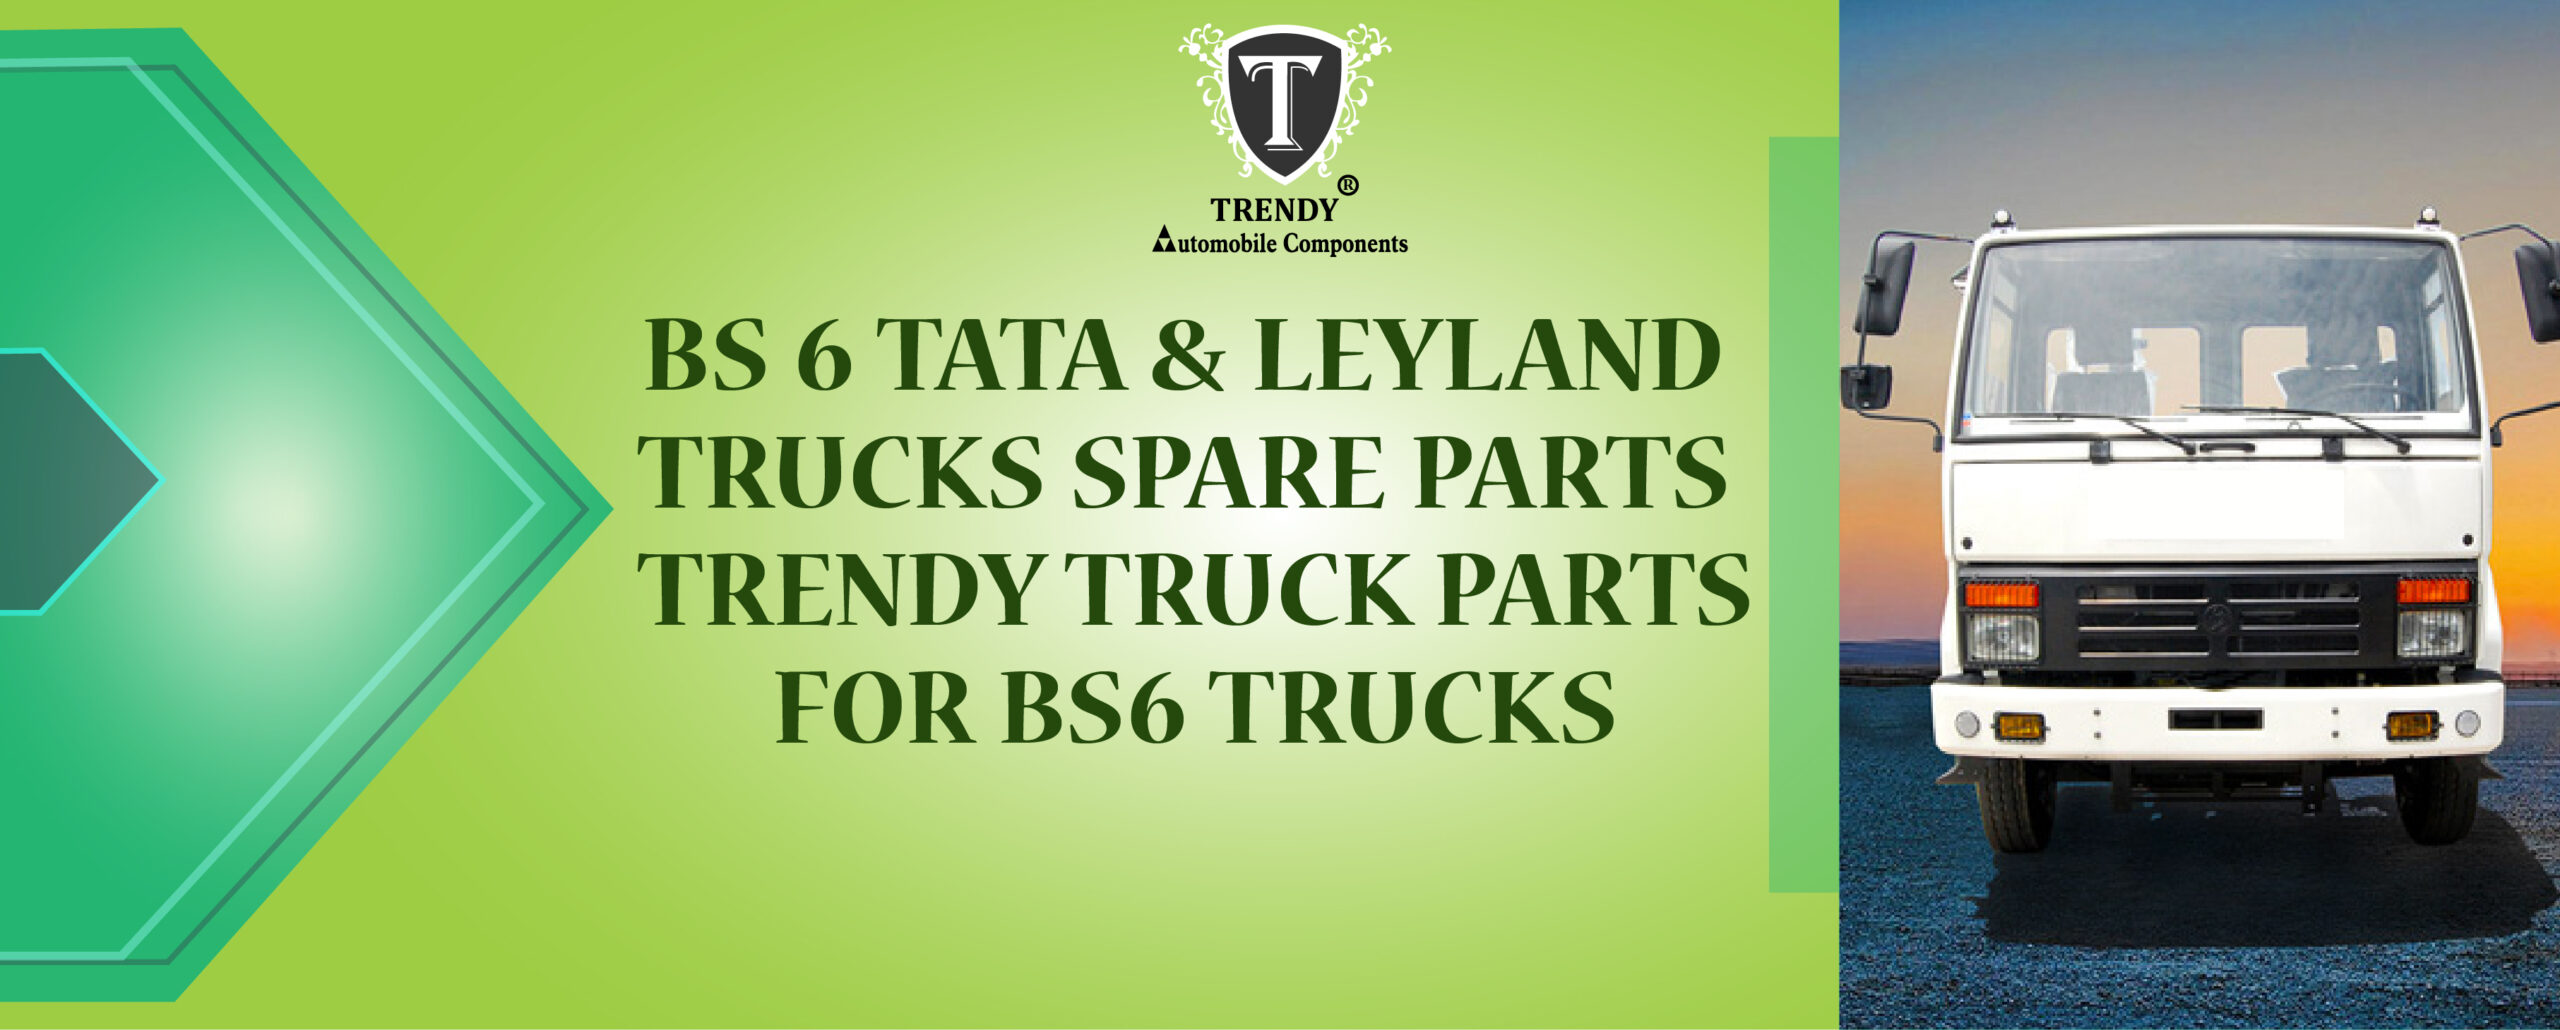 BS 6 TATA & Leyland Trucks Spare Parts | TRENDY Truck Parts For BS6 Trucks